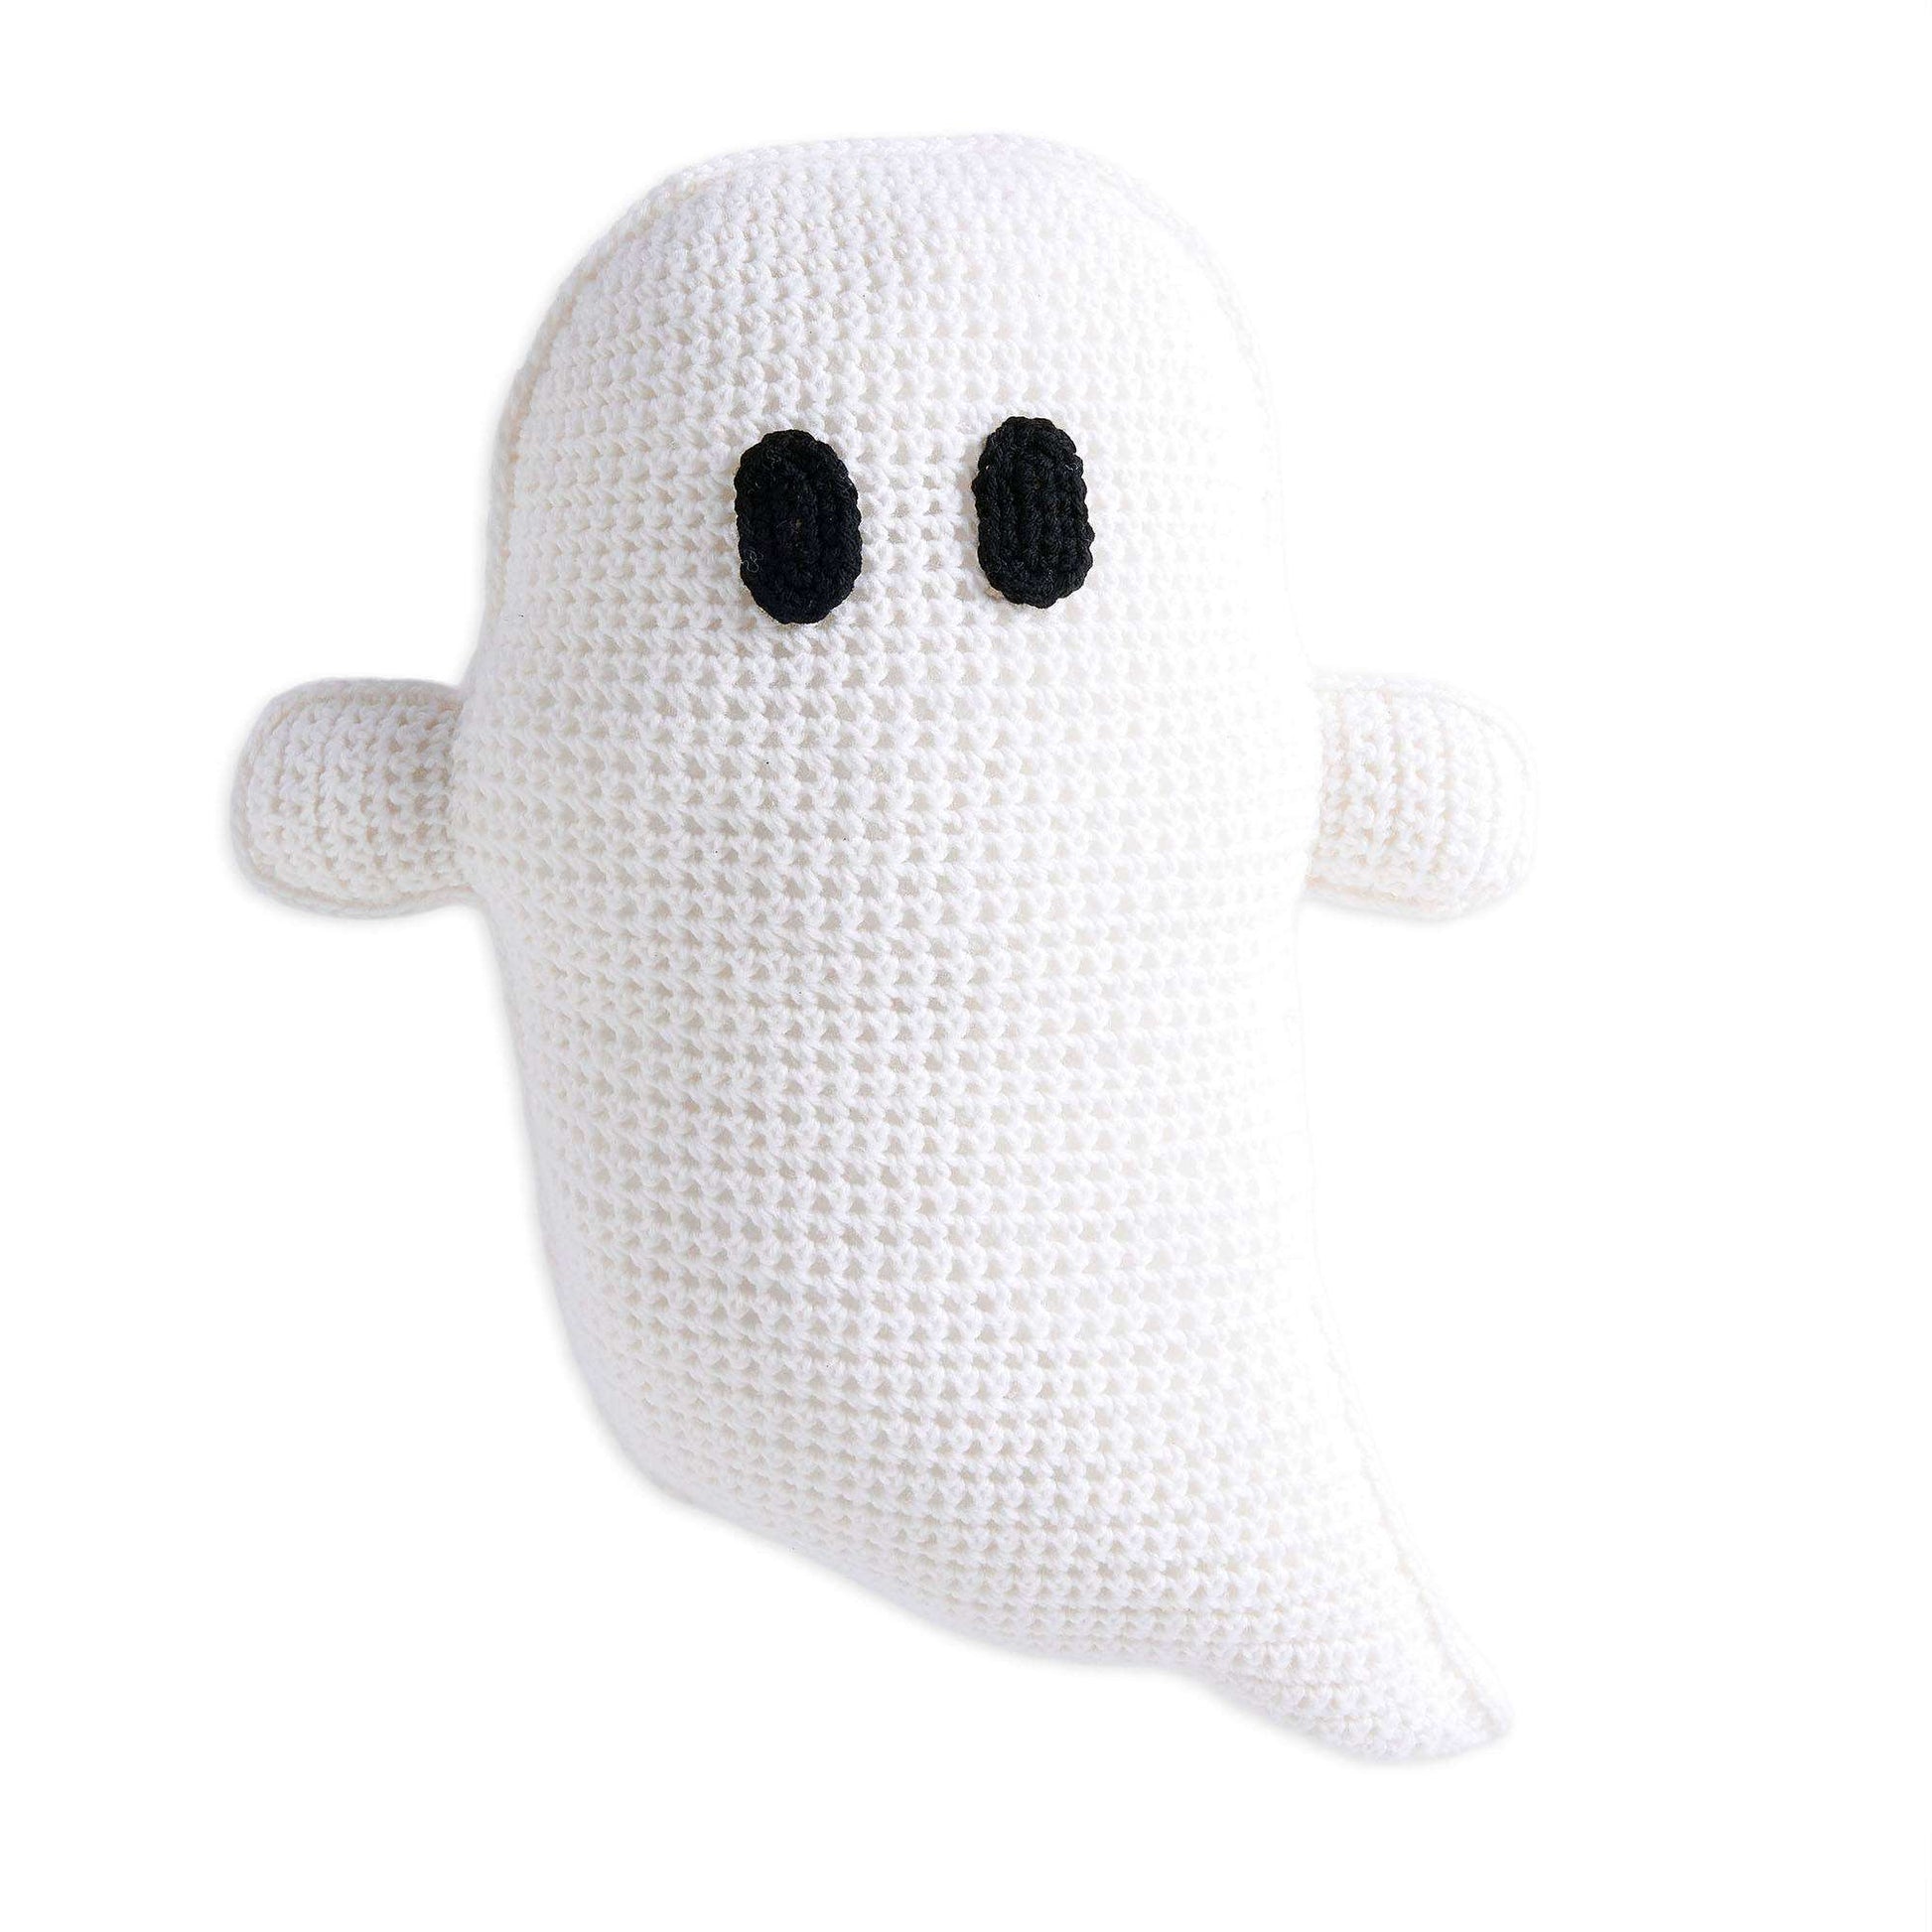 Caron Crochet Ghostie Pillow Caron Crochet Ghostie Pillow